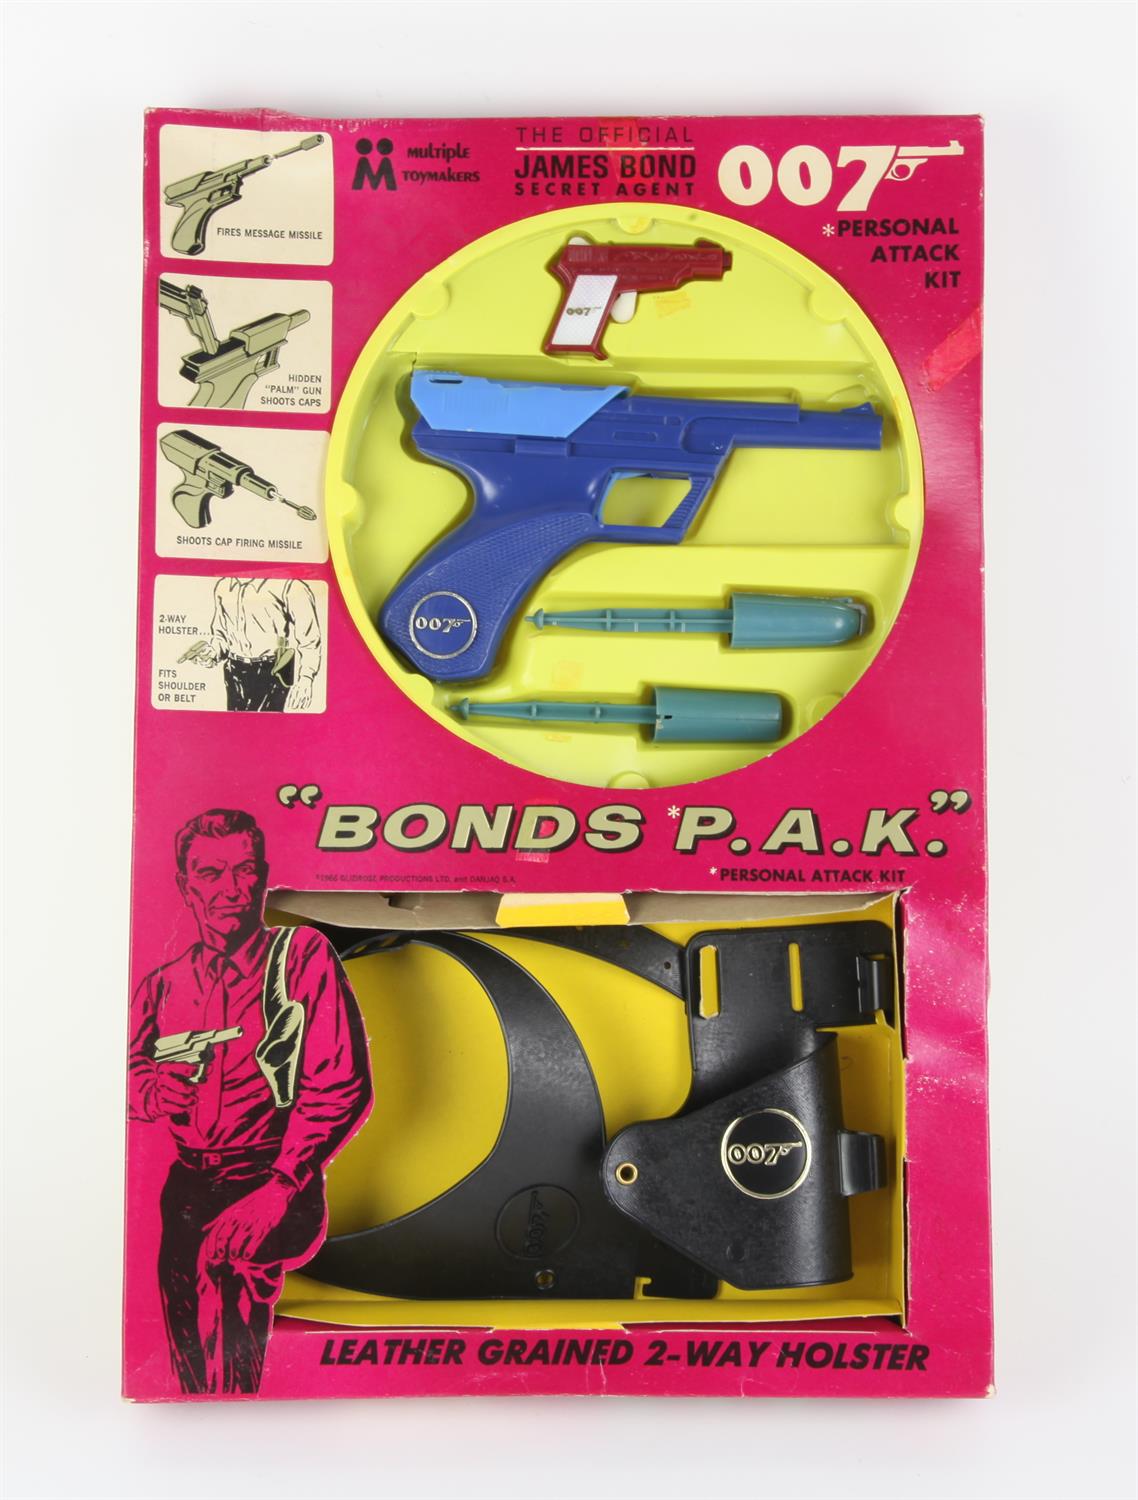 James Bond 007. Multiple Toymakers Bond's P.A.K. (Personal Attack Kit), 1966. Includes dart gun